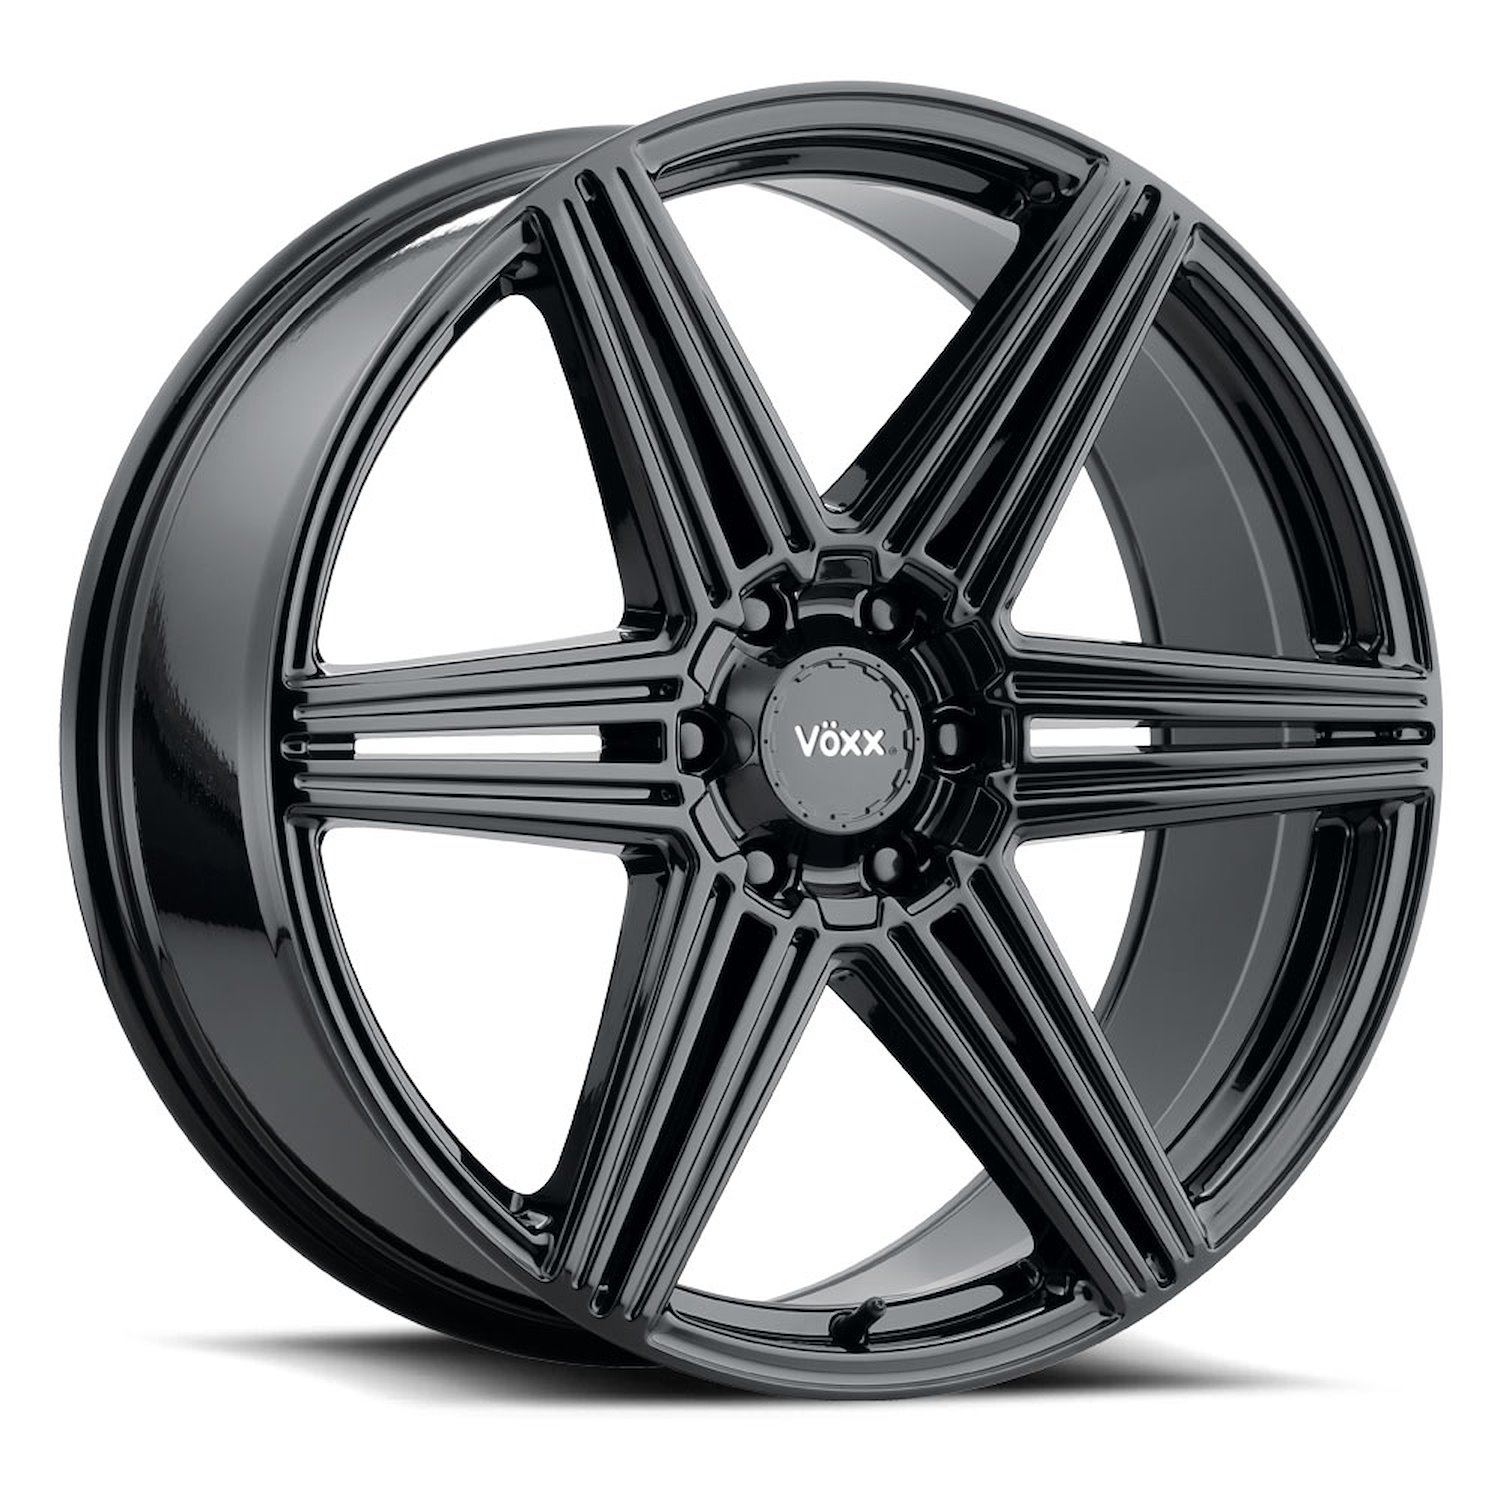 SOT 885-6004-39 GB Sotto Wheel [Size: 18" x 8.50"] Finish: Gloss Black